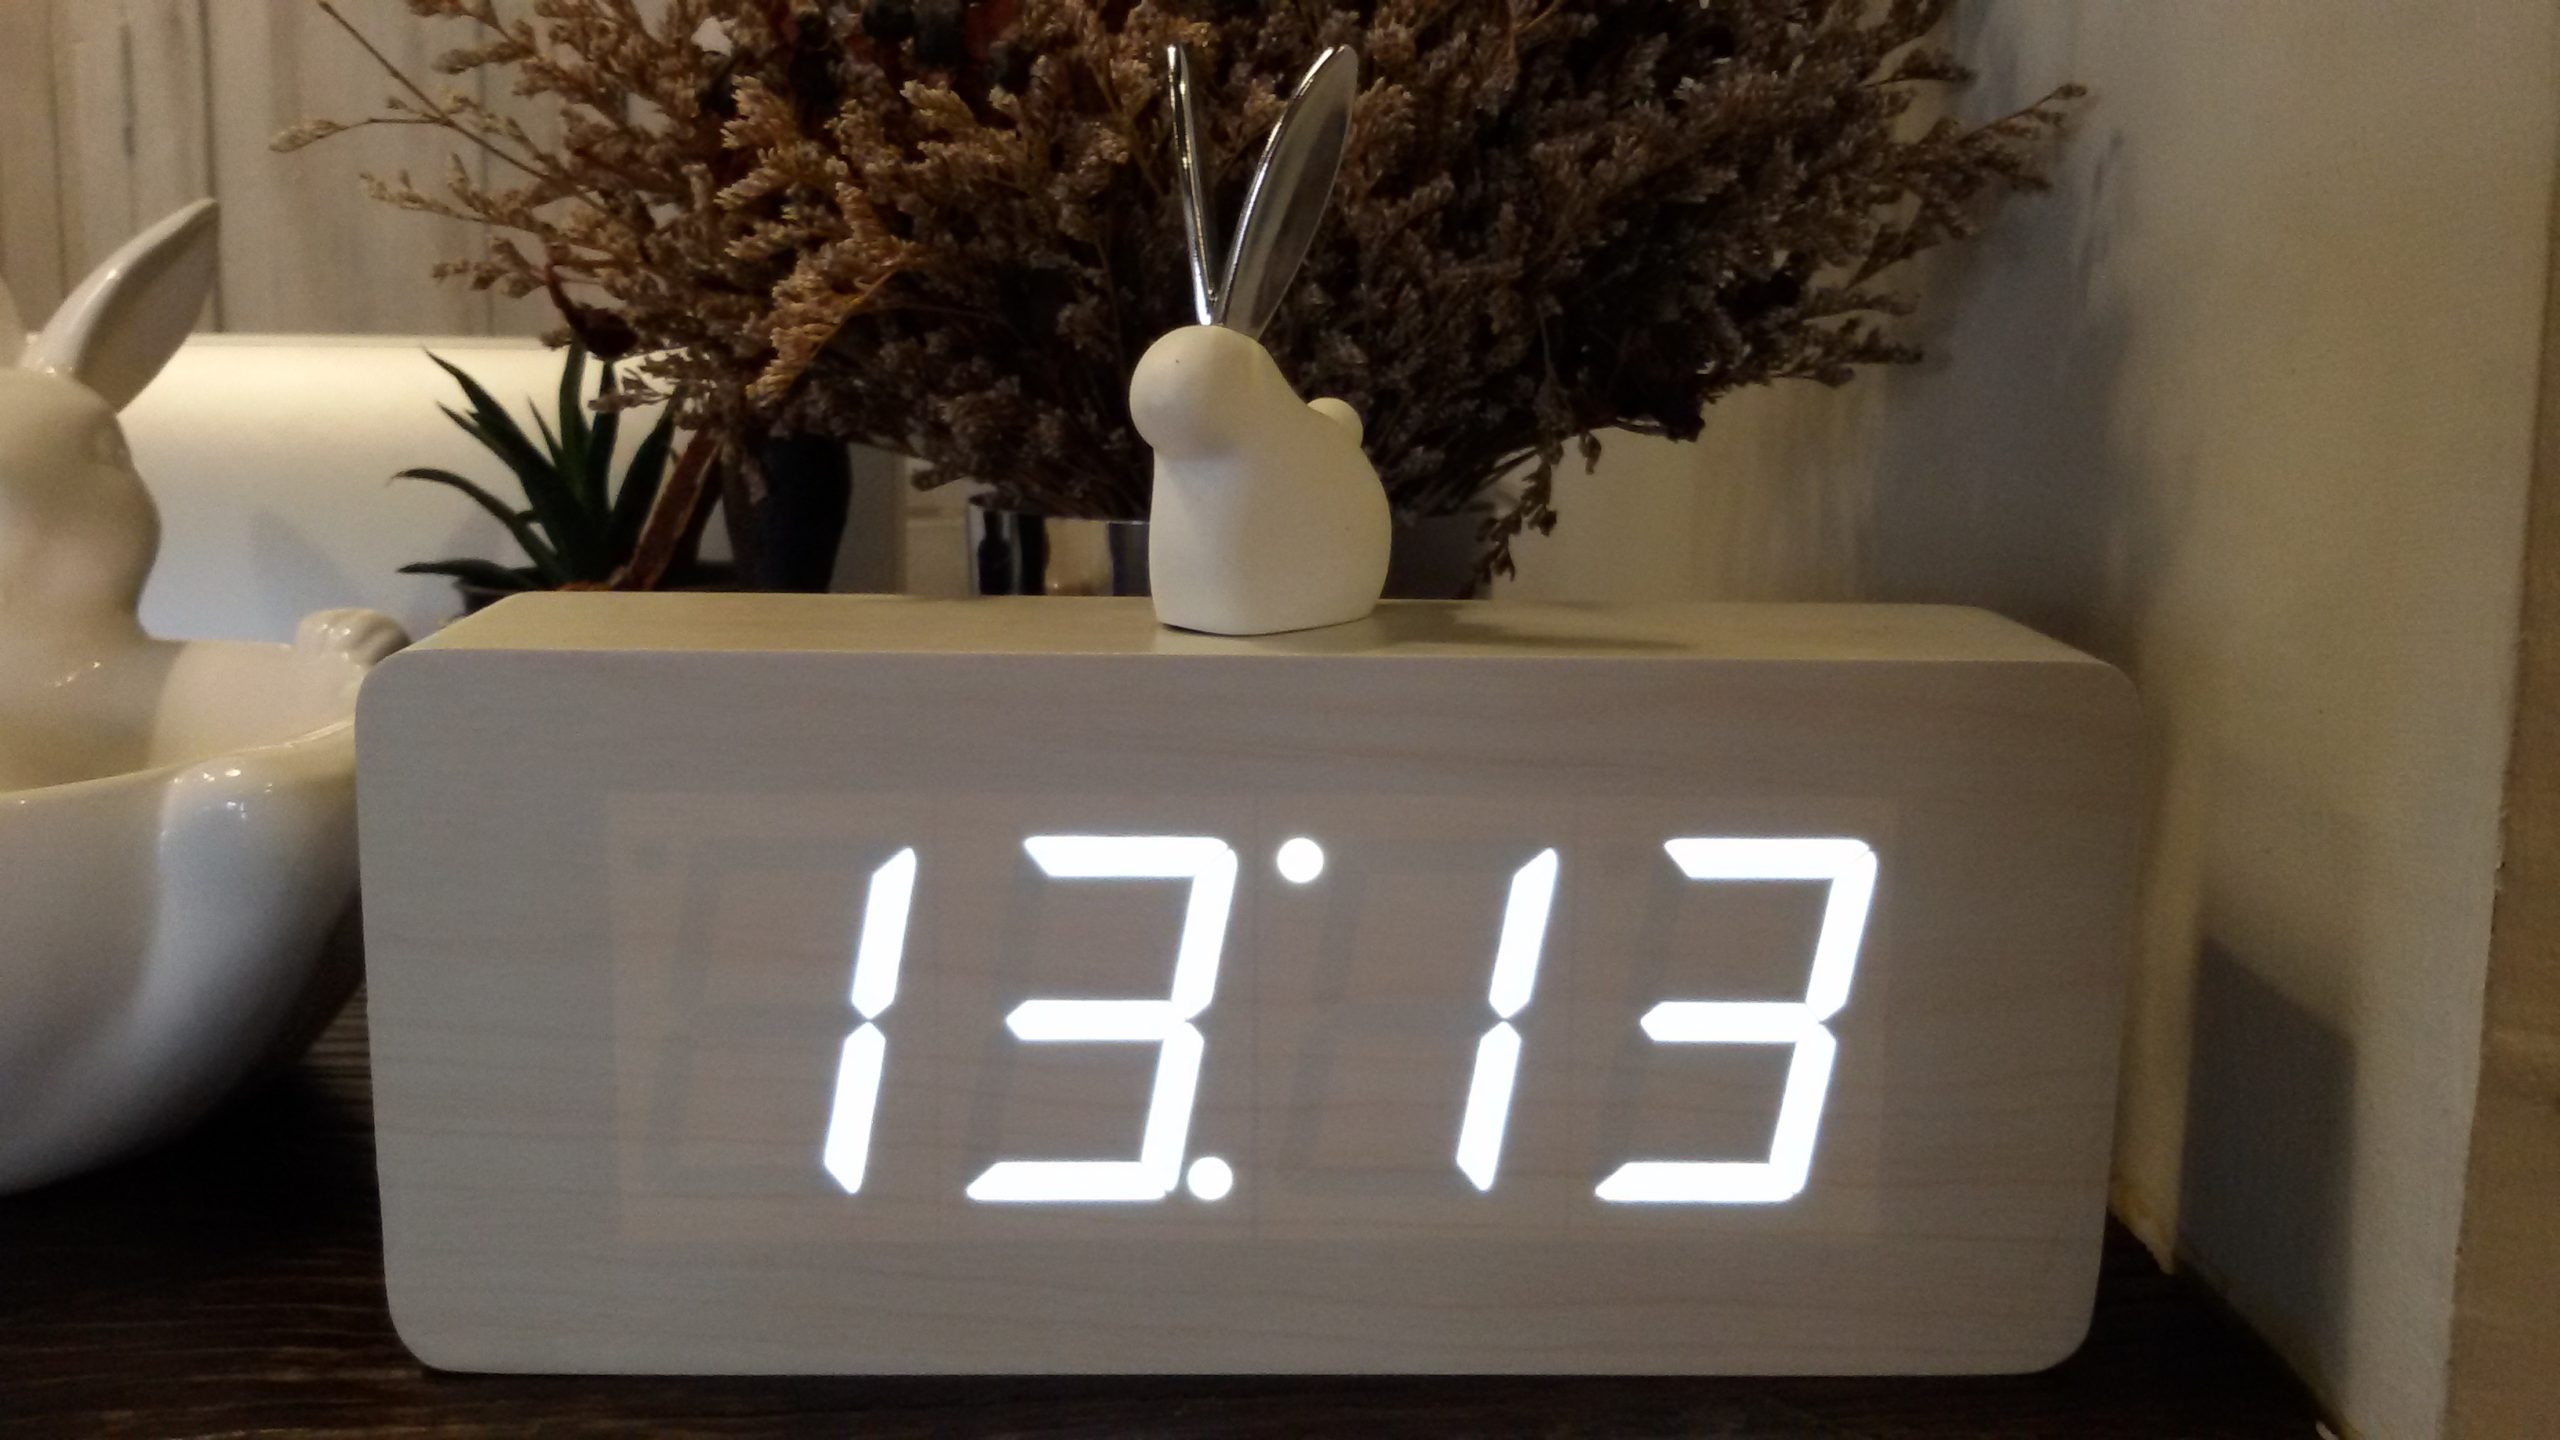 Видеть на часах 13 13. 11 11 Электронные часы. Одинаковые цифры на часах. Одинаковые цифры часов. Цифры на электронных часах.